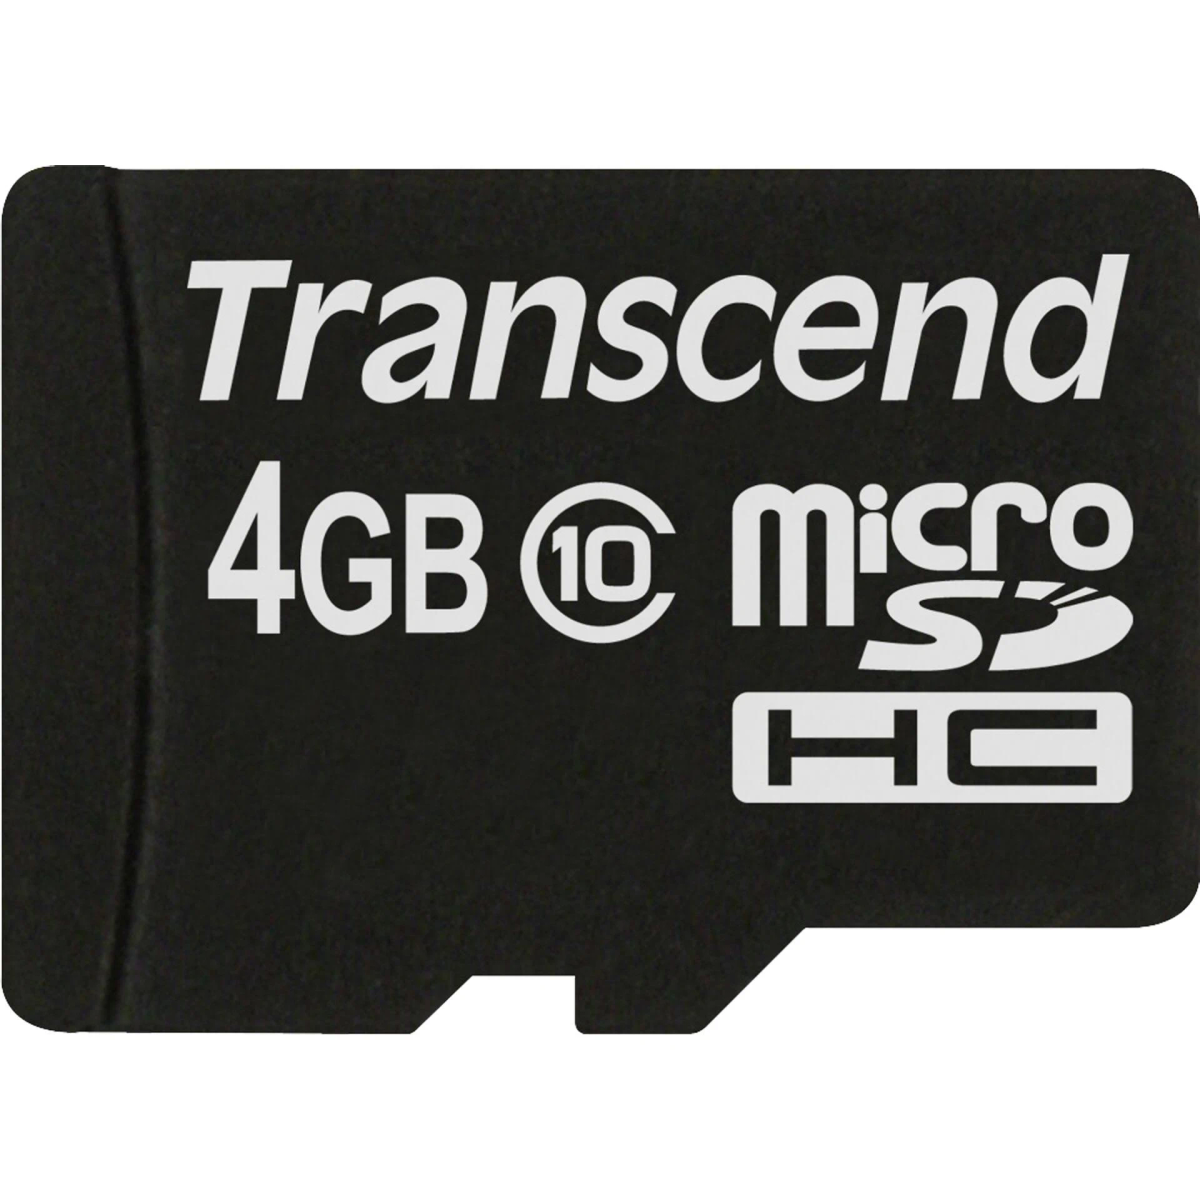 SDHC, GB, SD m0000BIR6X, Micro-SDXC, 4 TRANSCEND 10 Micro-SDHC, MB/s Speicherkarte, Micro-SD,